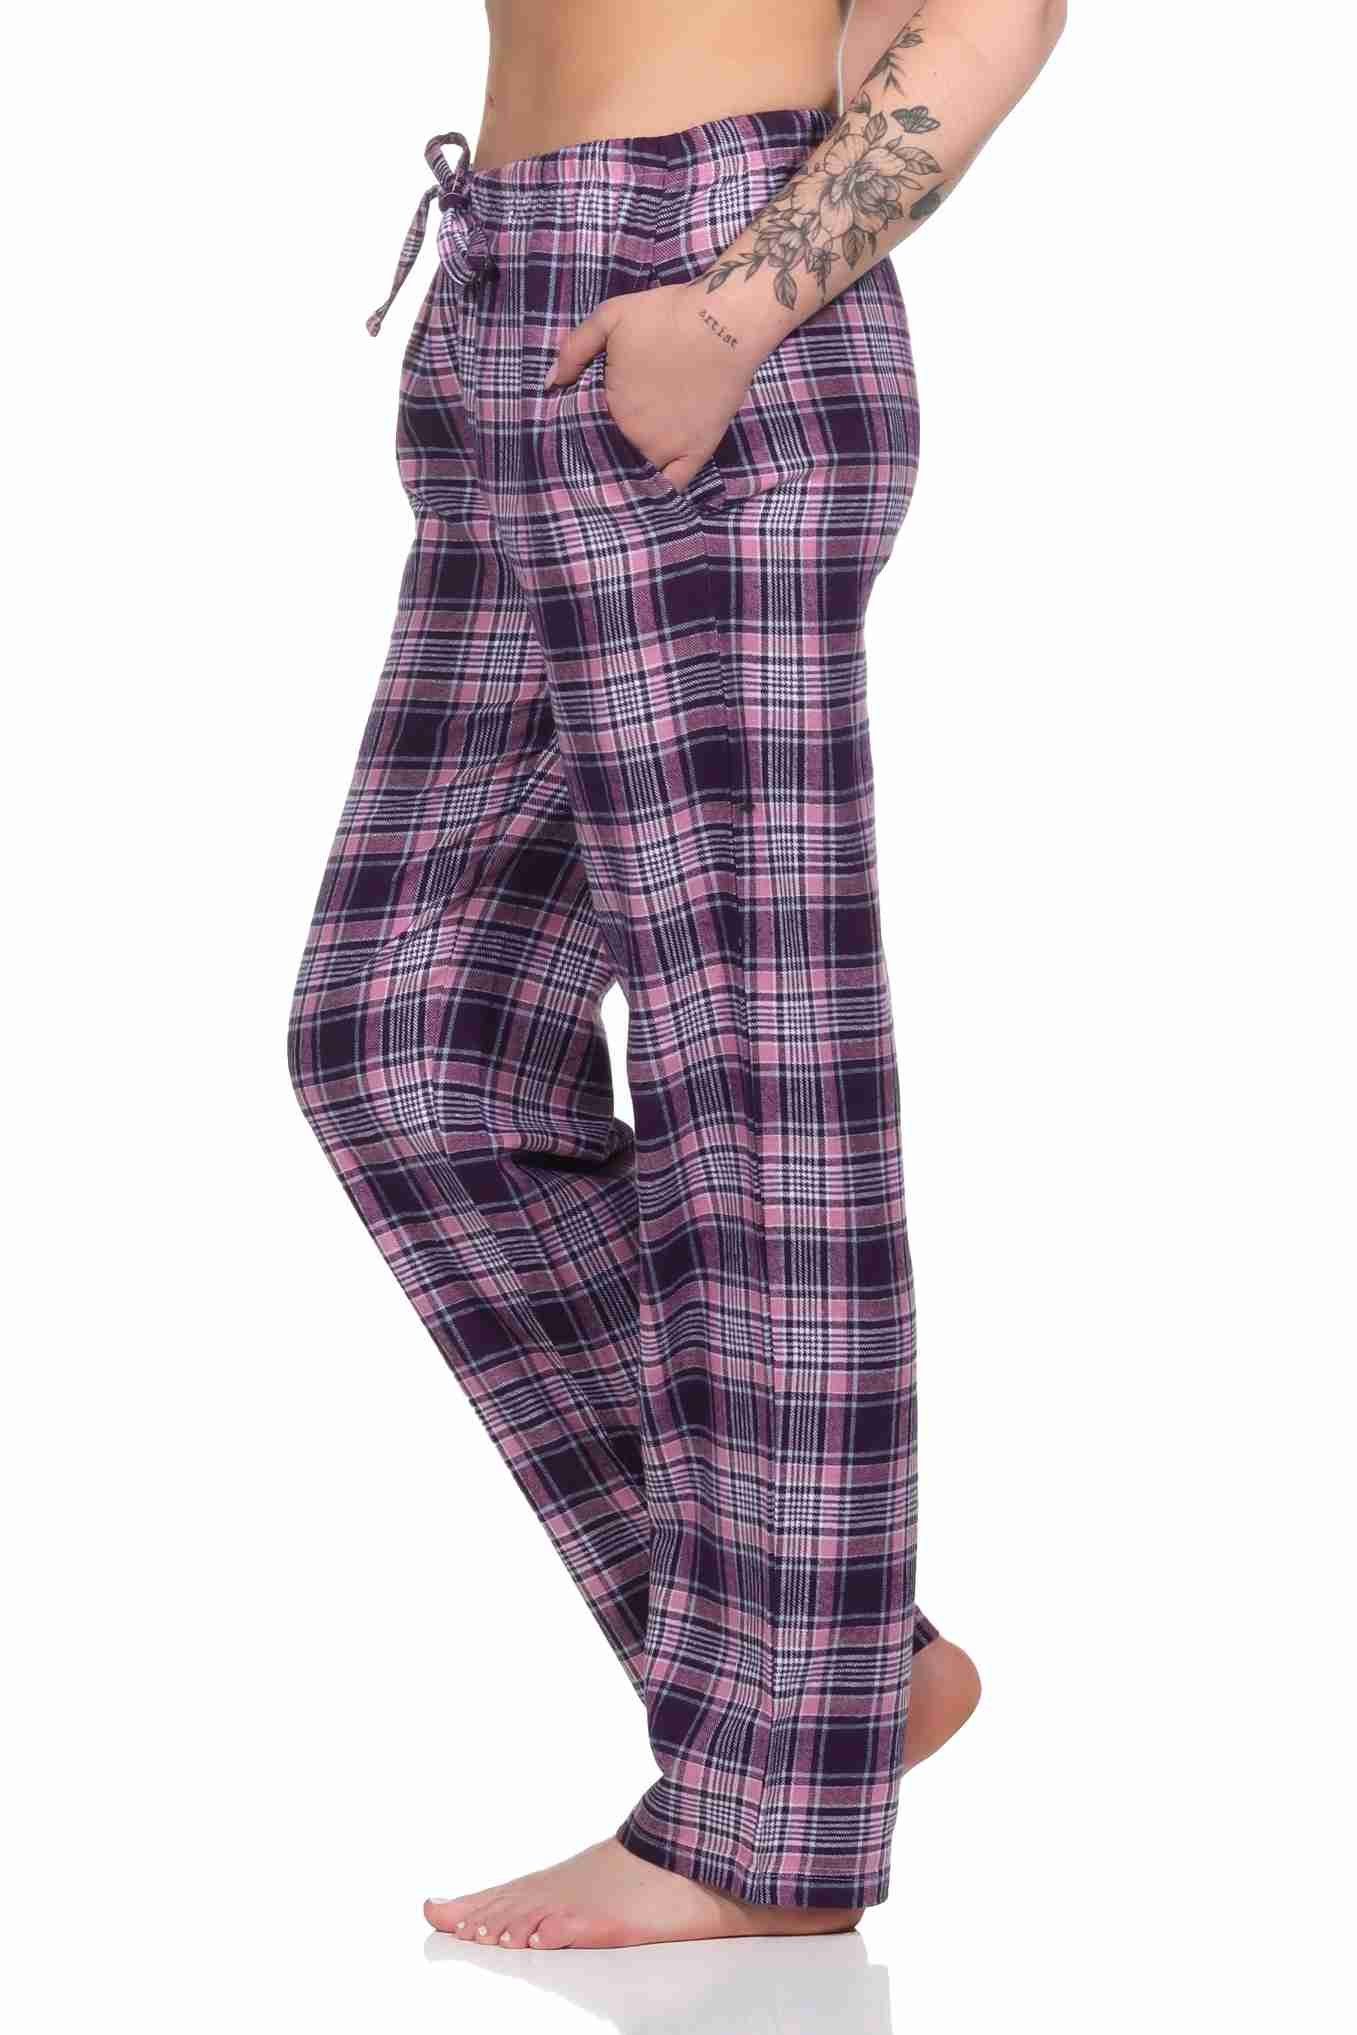 Pyjama Normann Dame Flanell aus Baumwolle relaxen Schlafanzug Hose kariert beere zum ideal